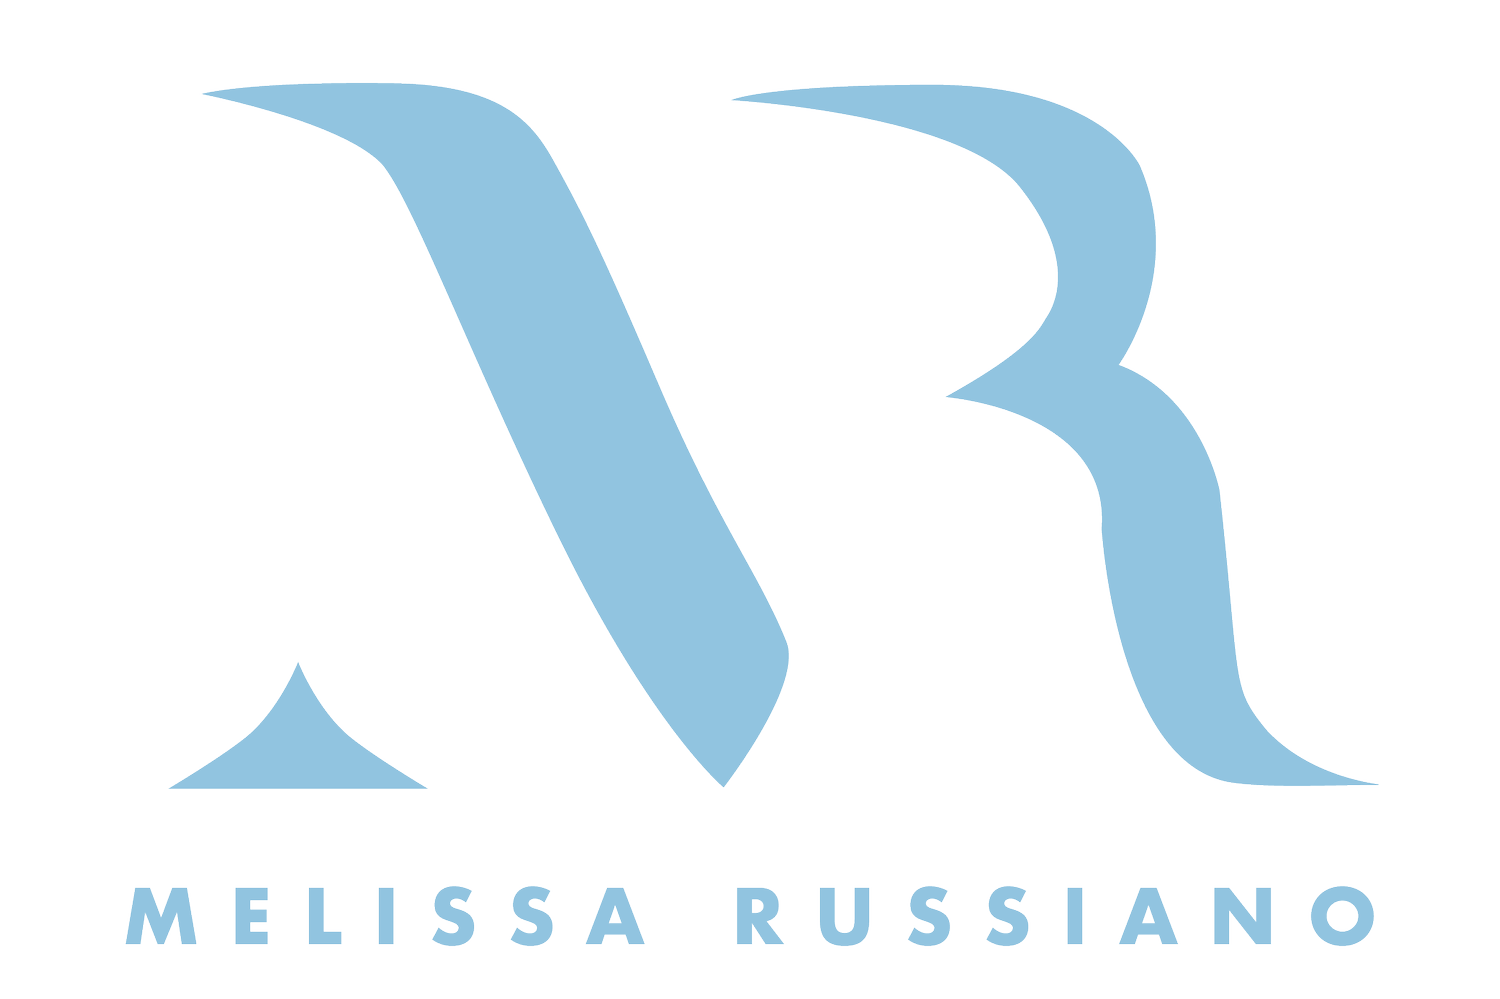 Melissa Russiano